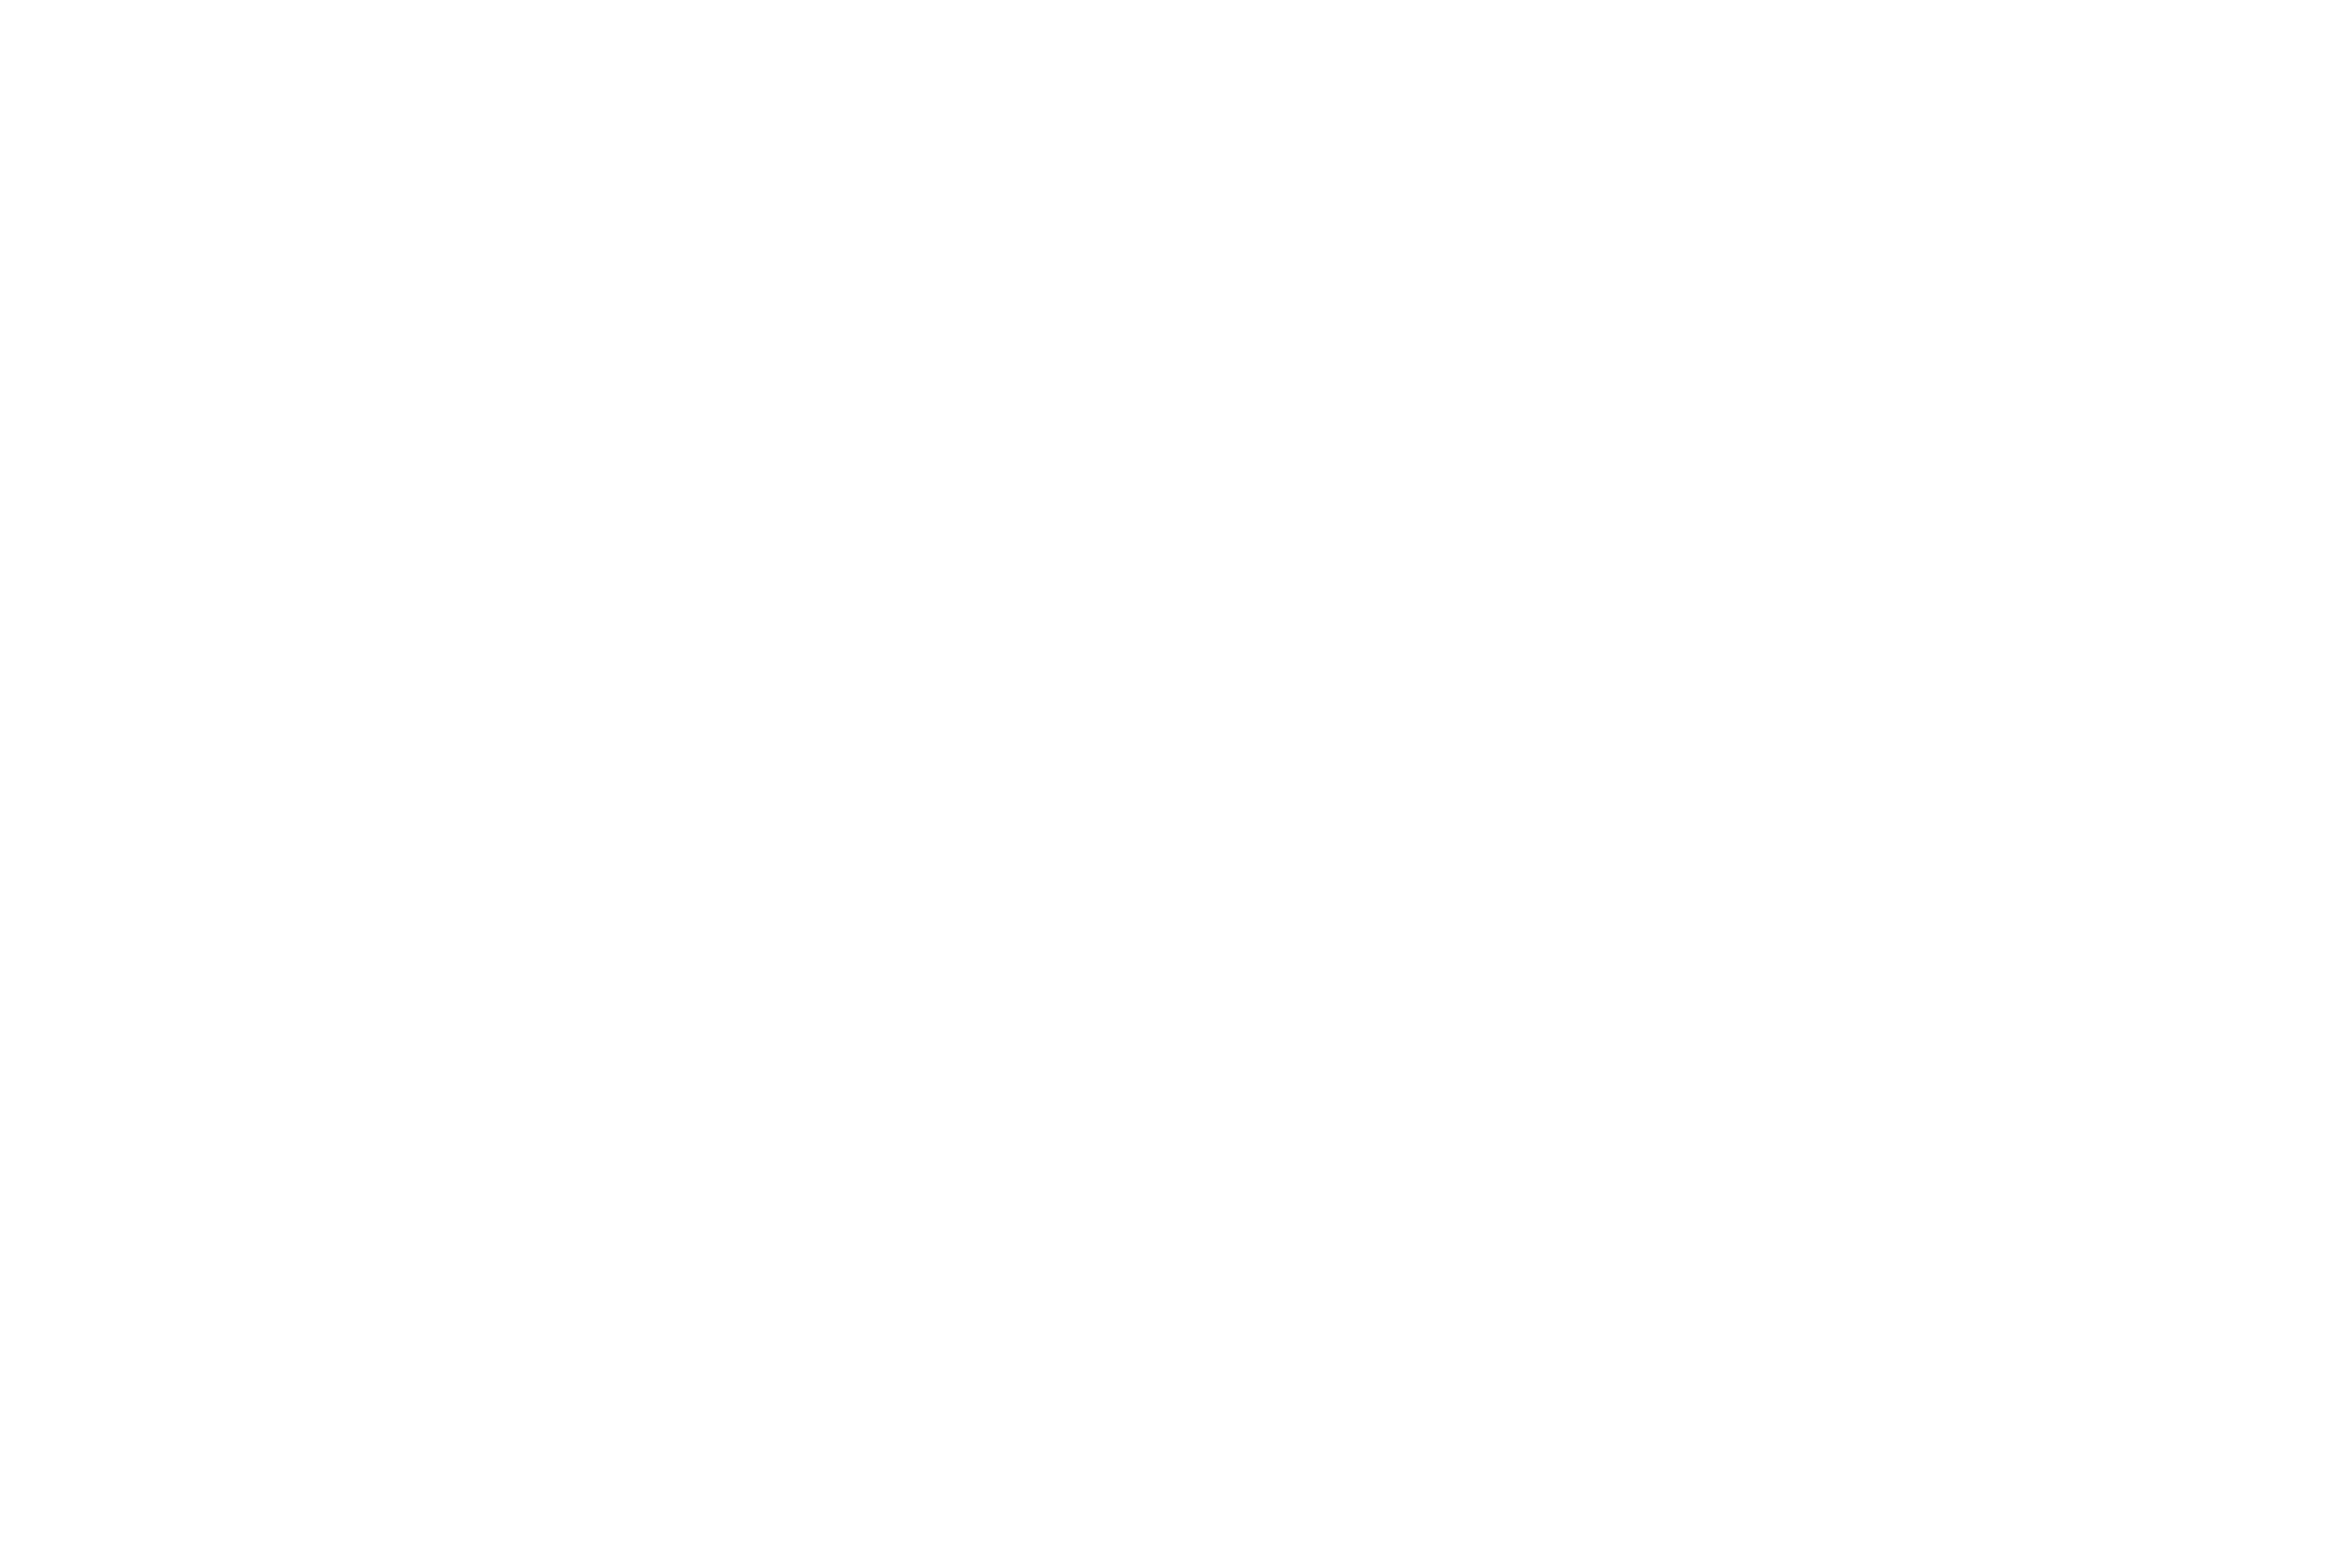 Sven Klein